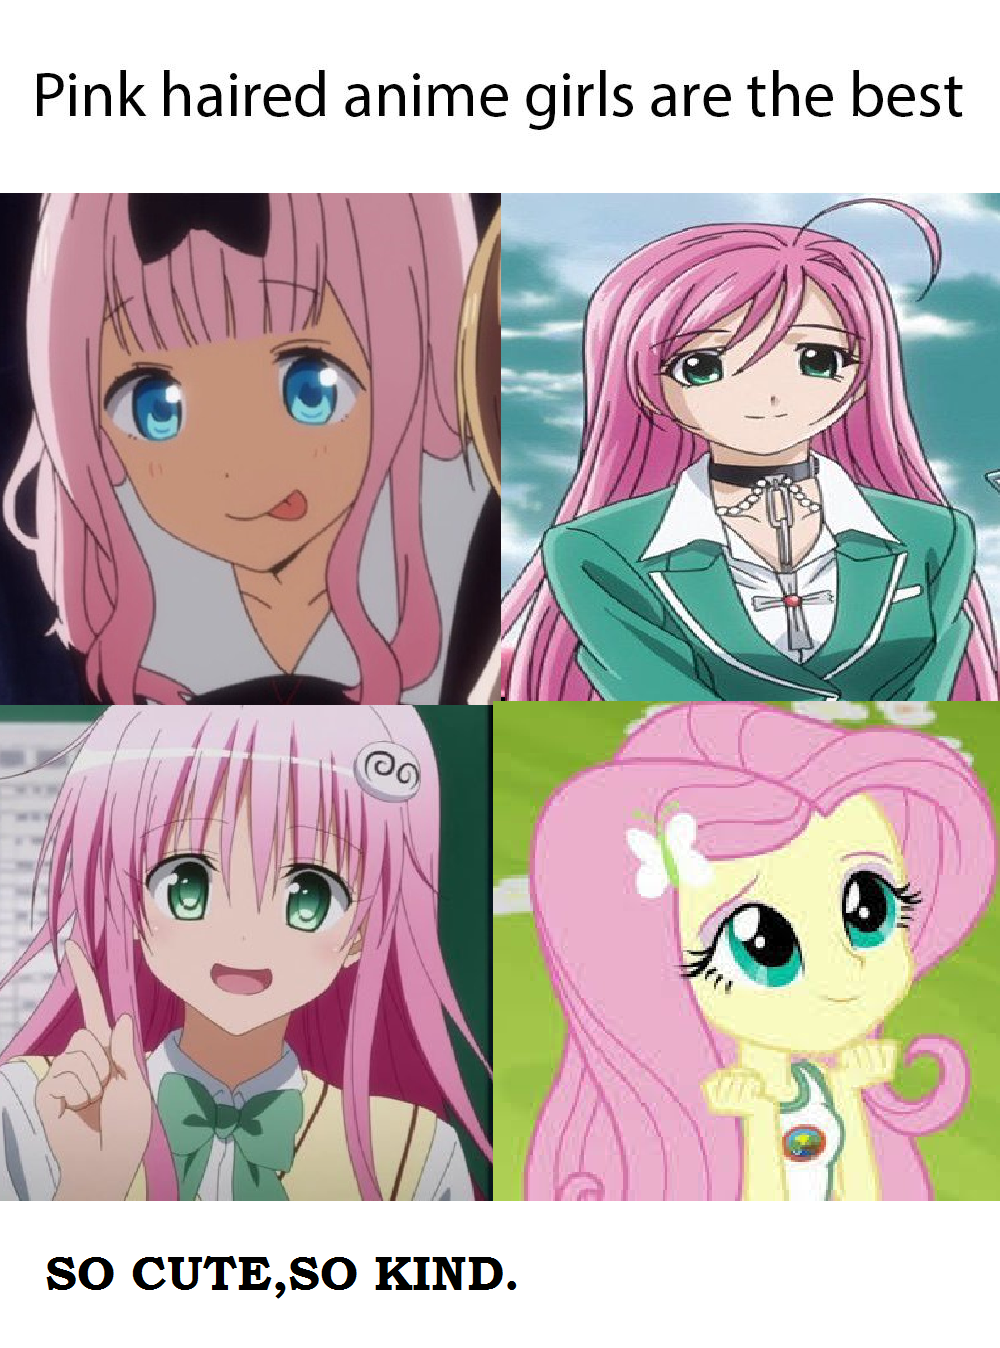 Pink hair Anime girls-Equestria Girls meme. by brandonale on DeviantArt